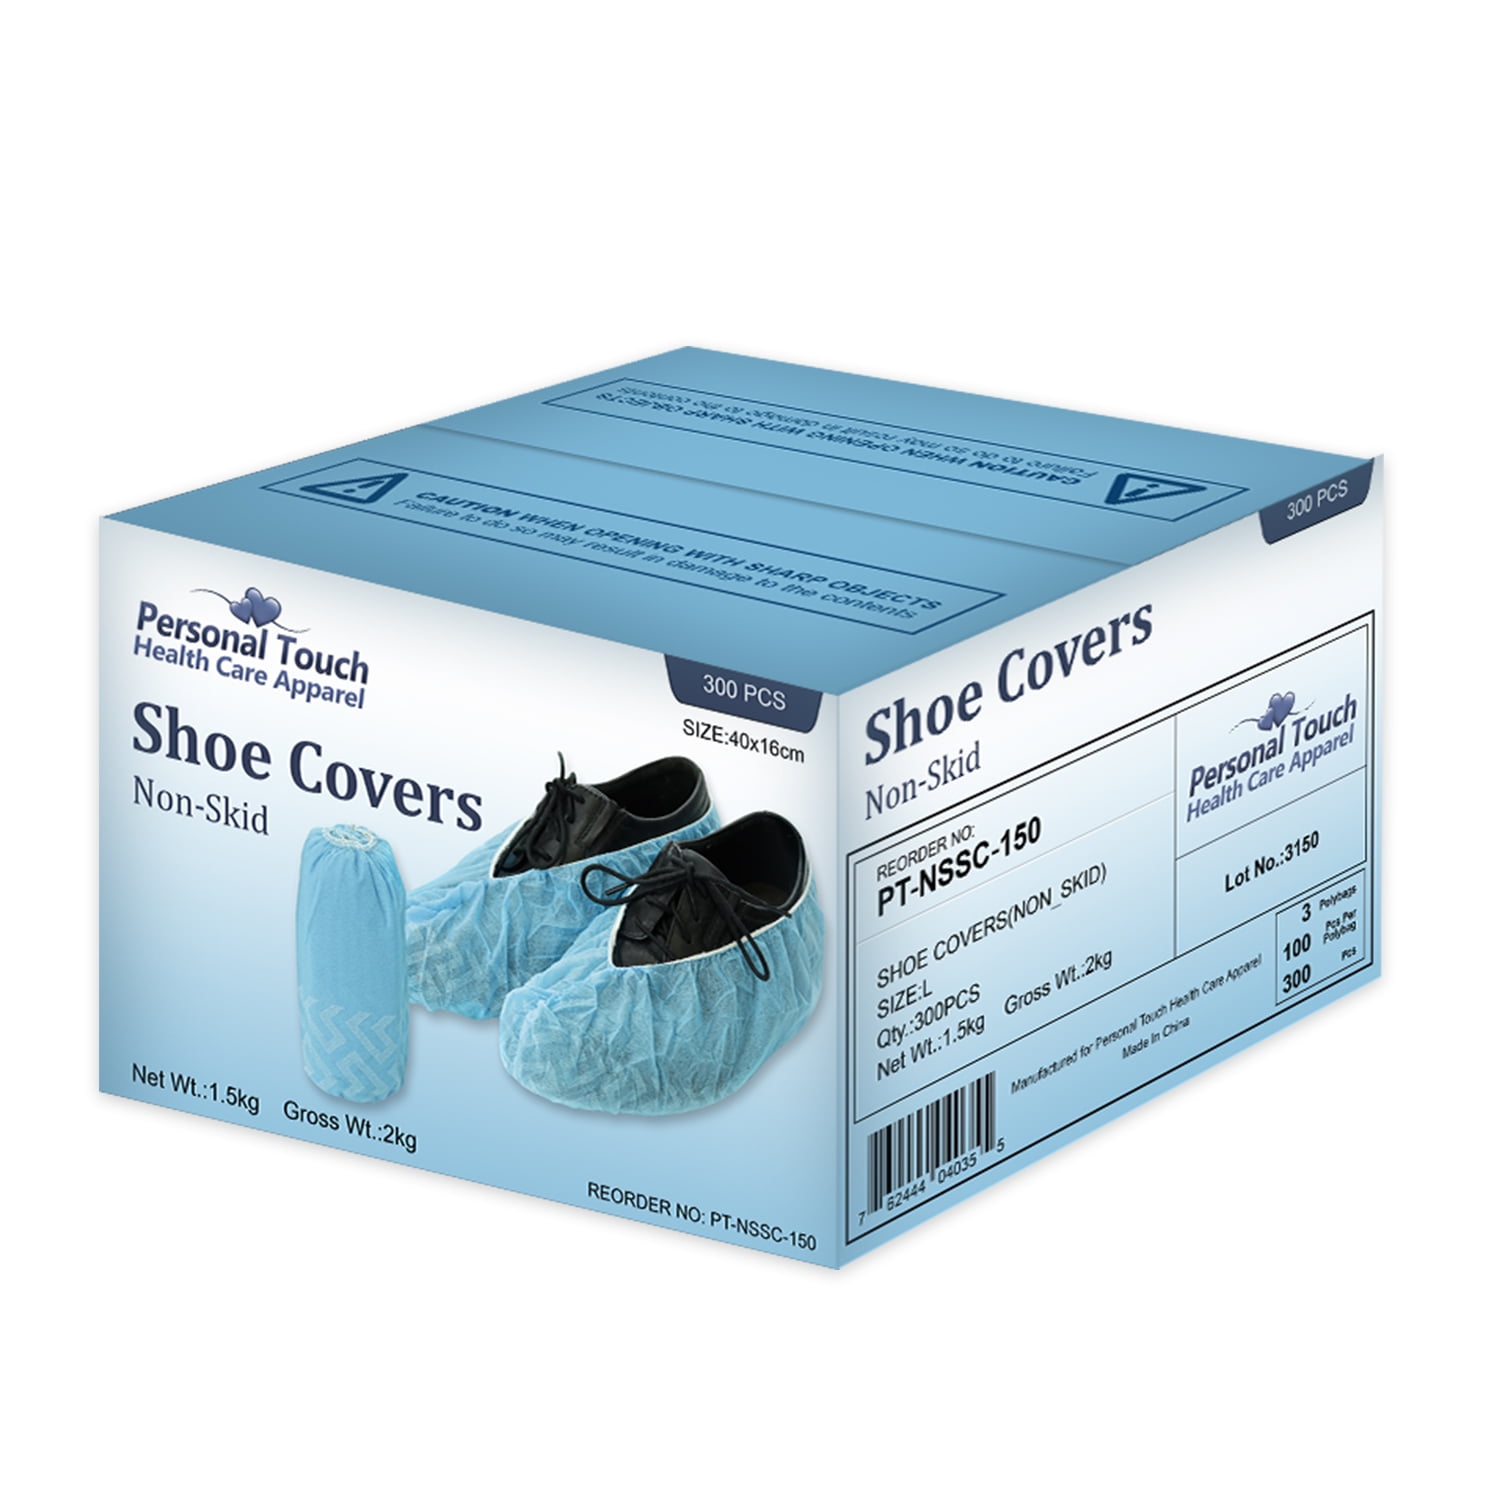 shoe cover box